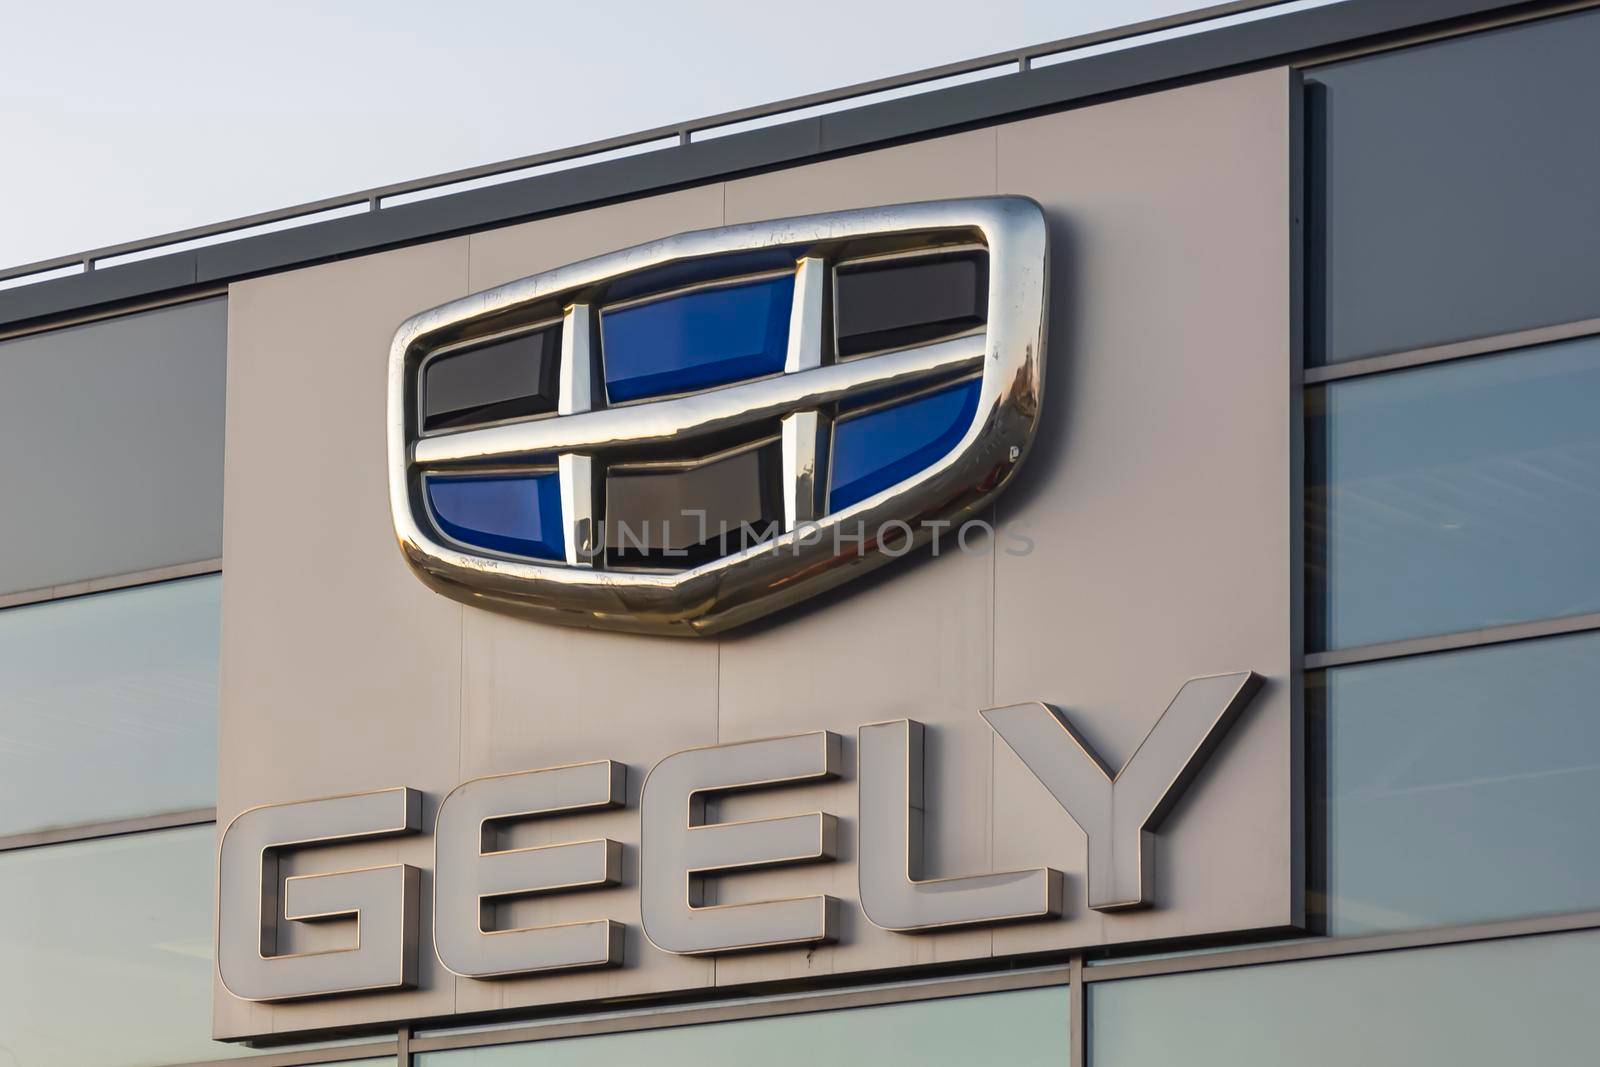 Belarus, Minsk-11/09/2020: GEELY Logo on the building facade. Stock photo.